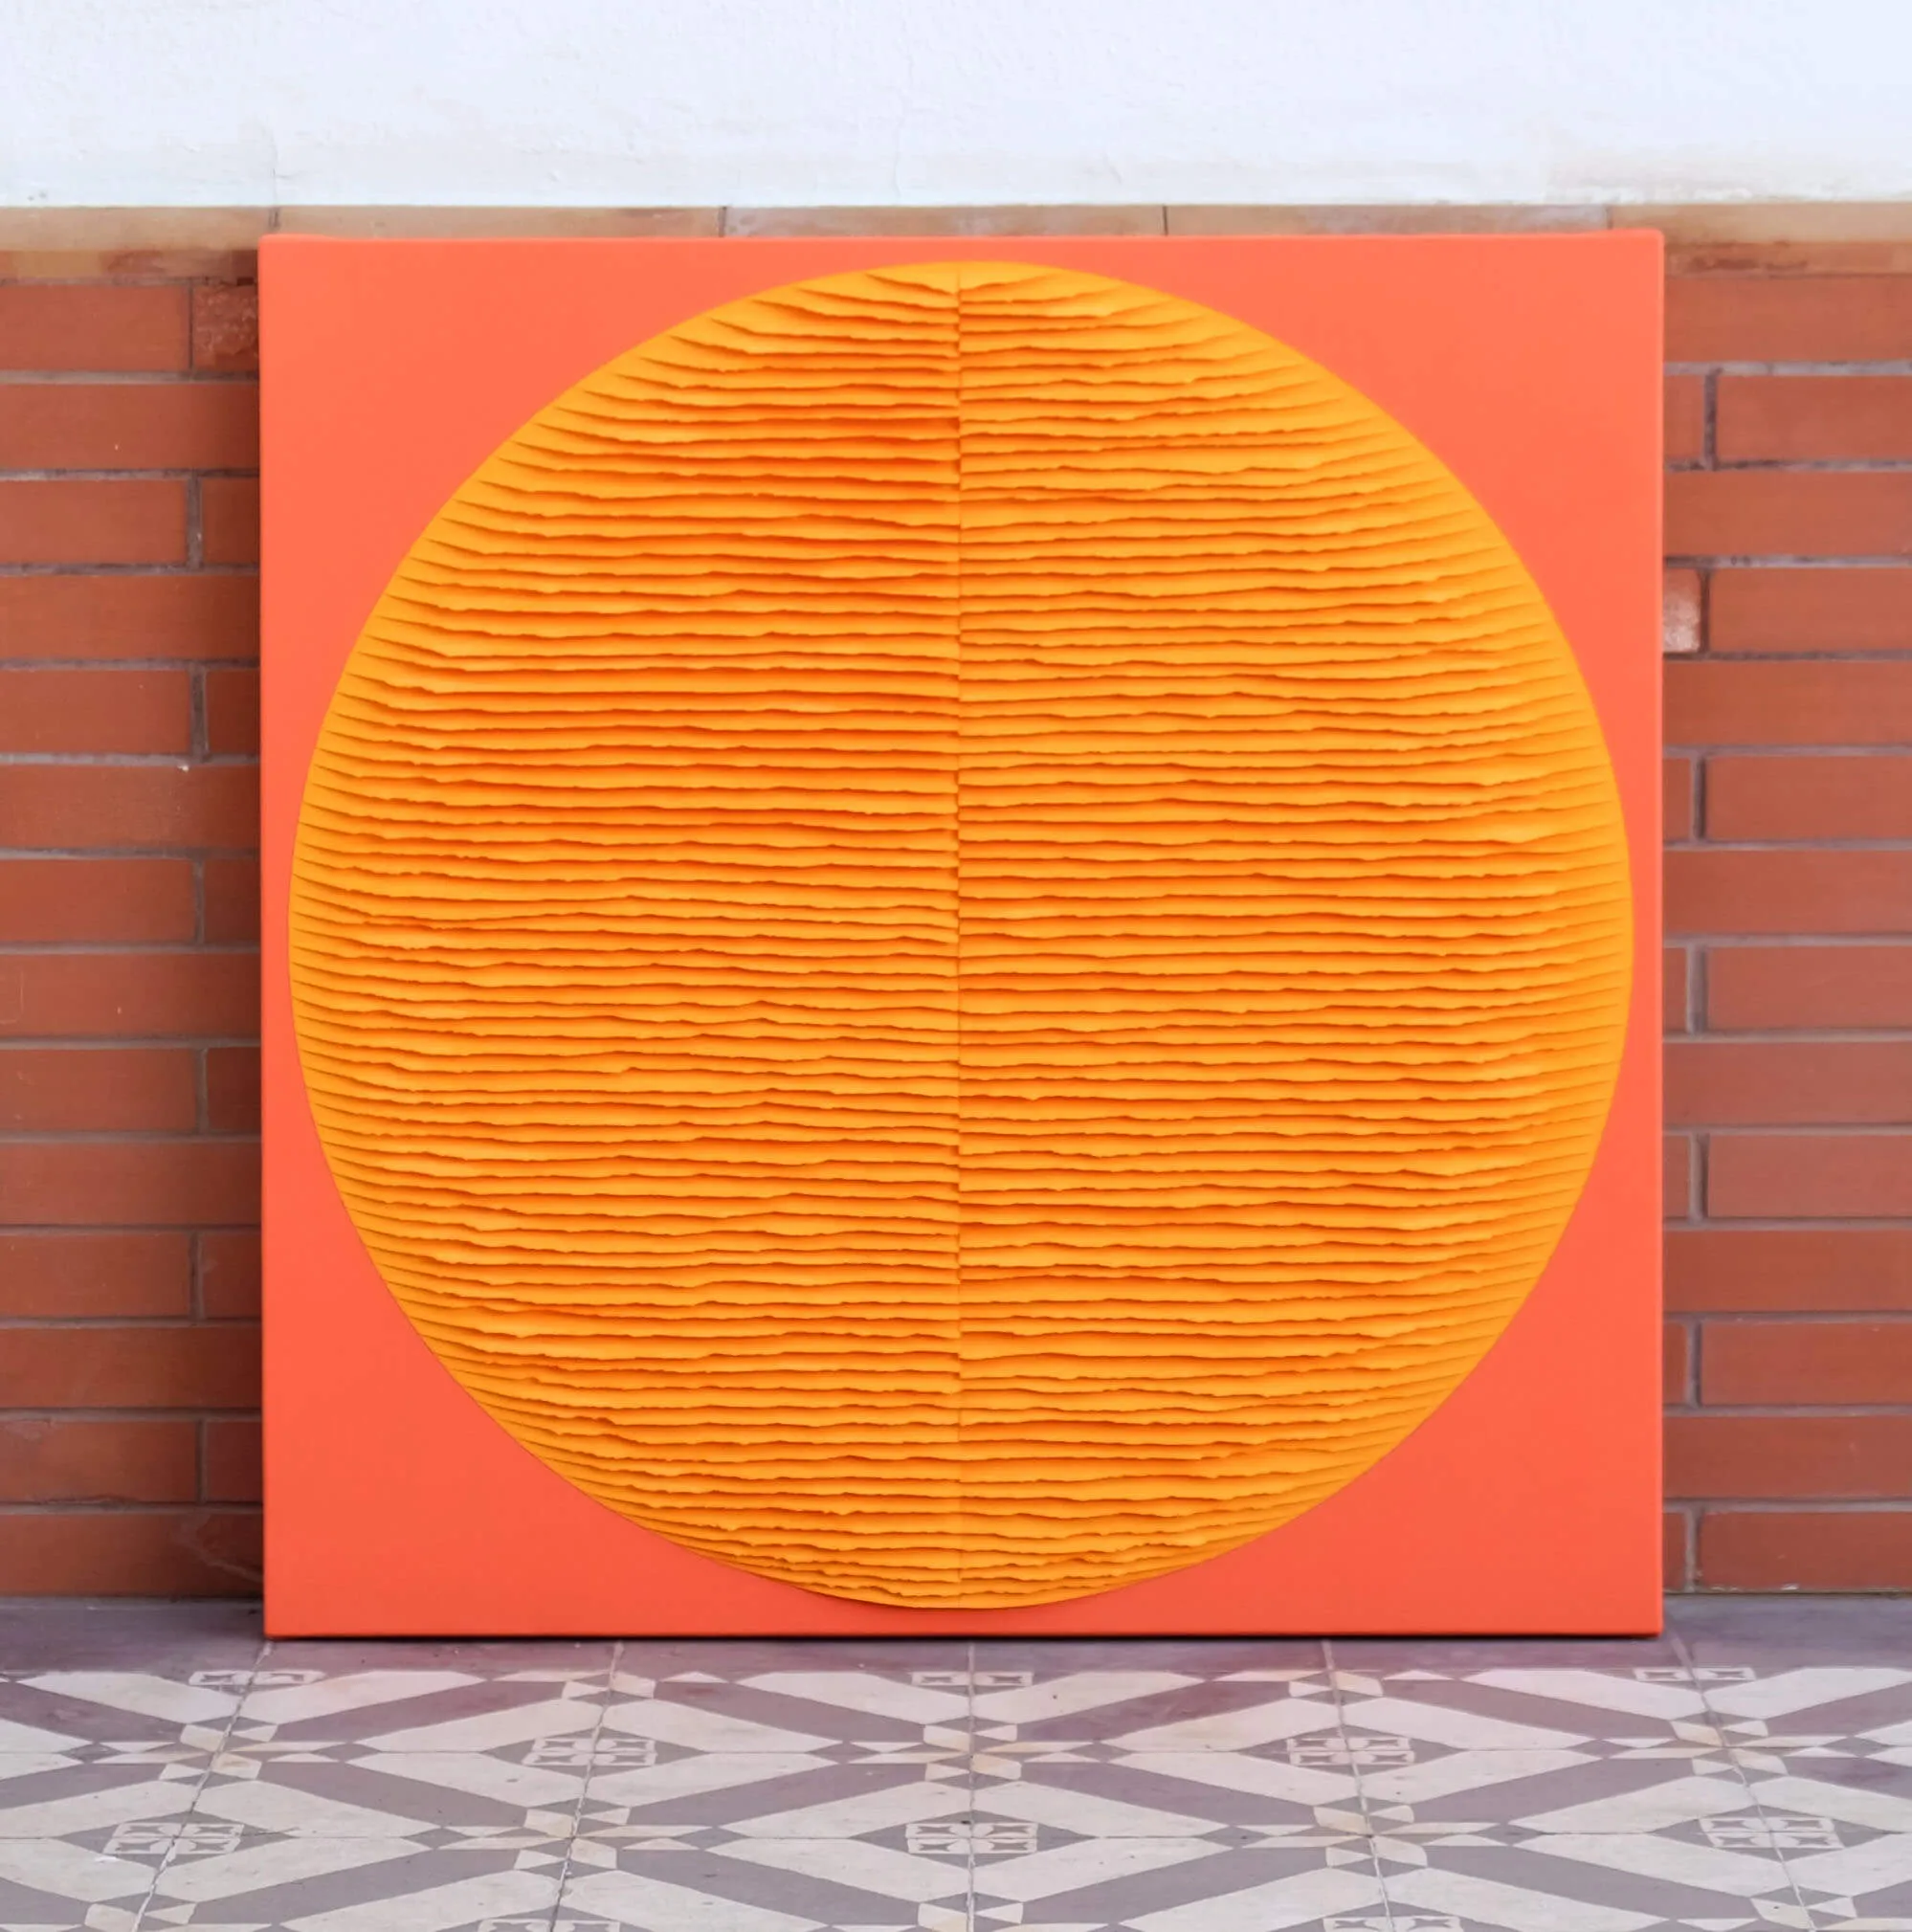 Fernando Daza Visual Artist - Círculo naranja sobre naranja